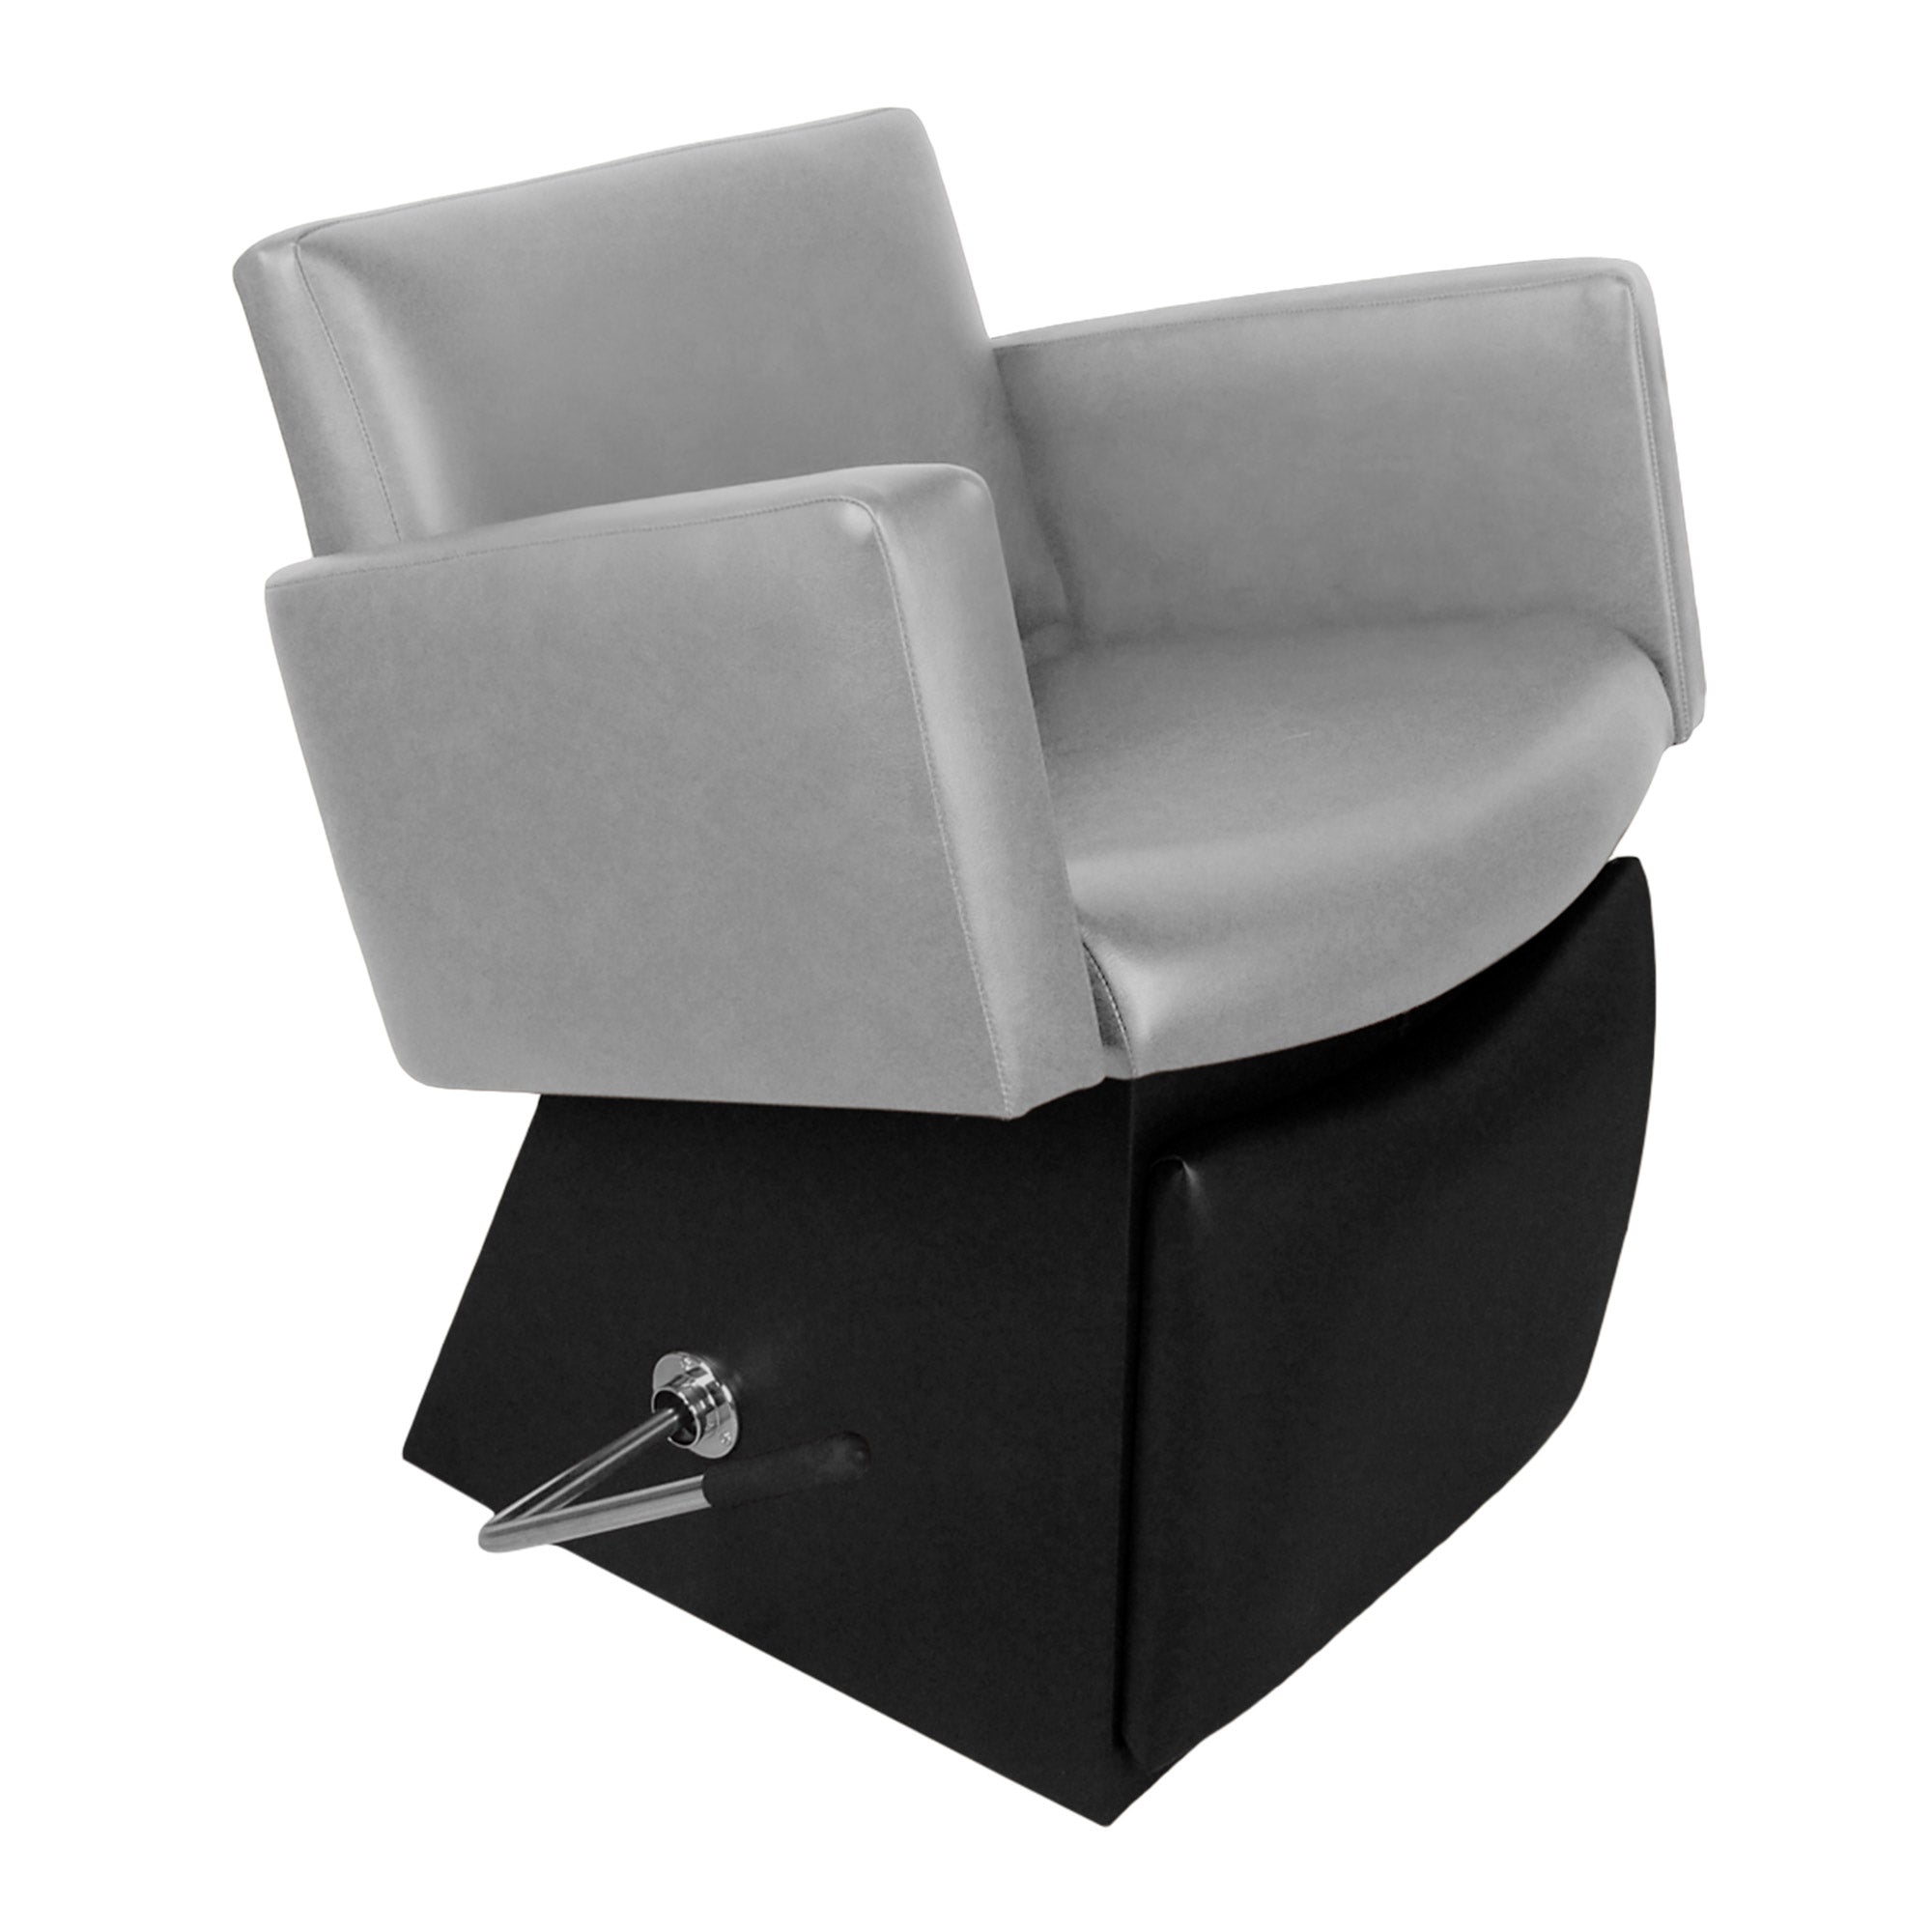 Cigno Lever-Control Shampoo Chair with Legrest